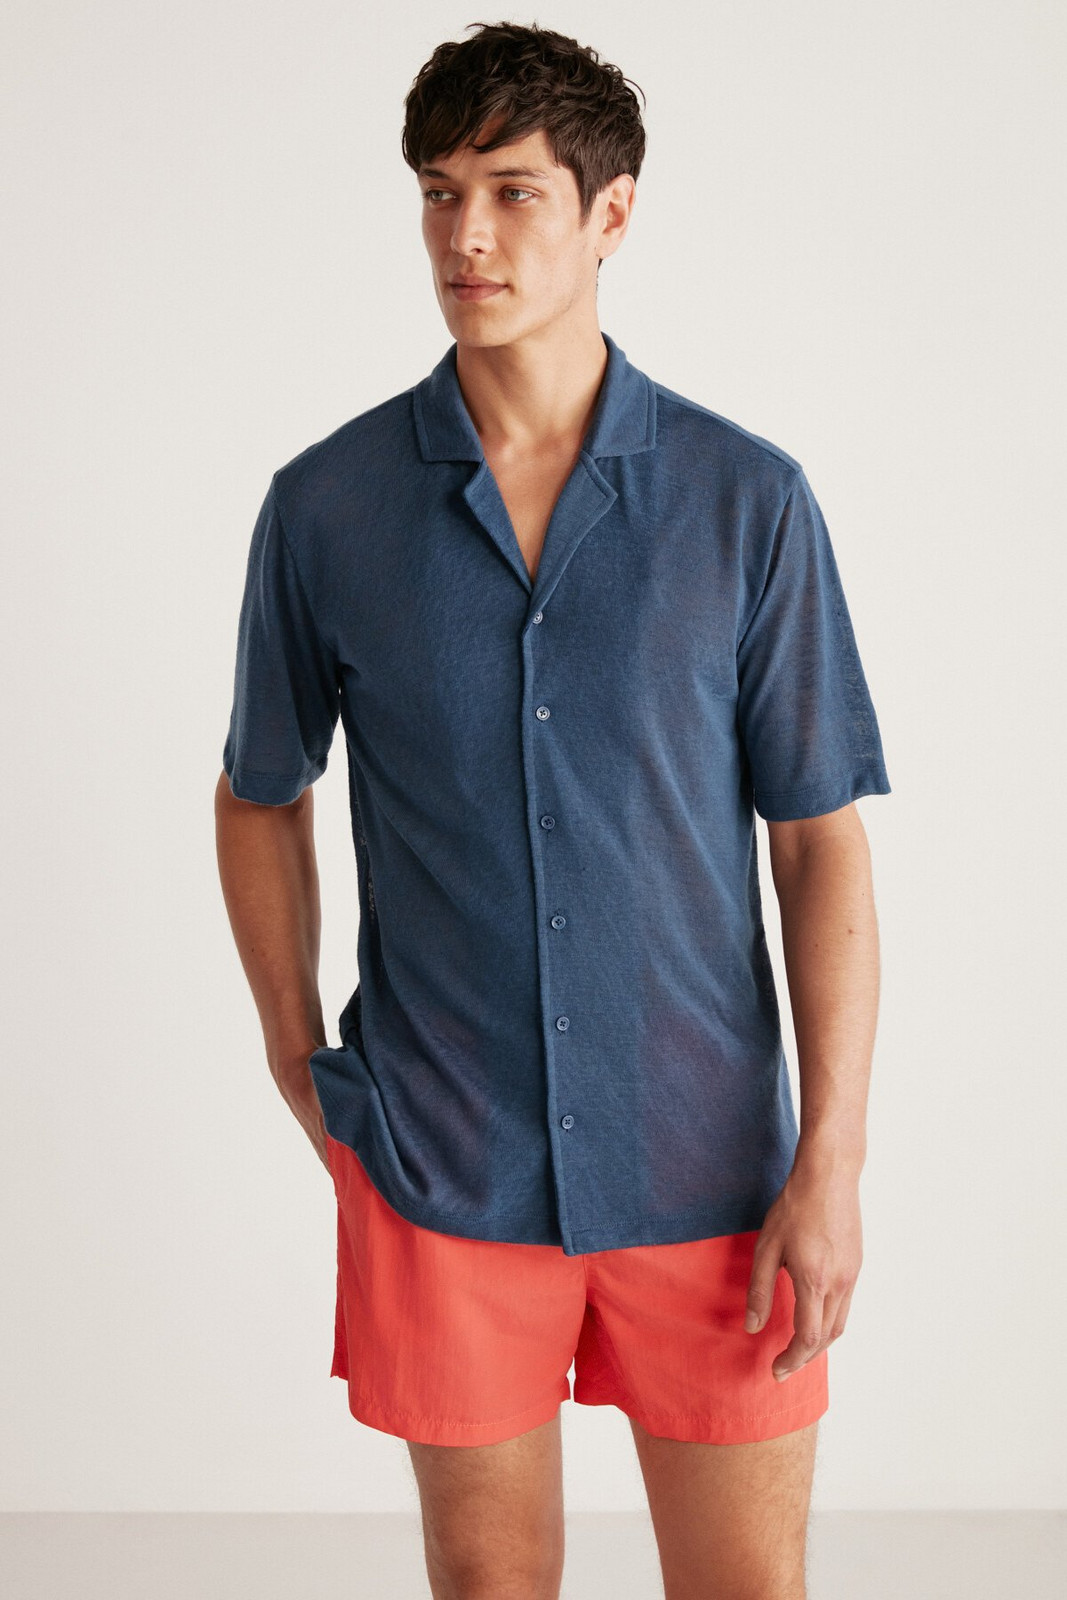 GRIMELANGE Doug Men's Linen Look Regular Fit Tirile Tiril Fabric Summer Navy Blue Shirt